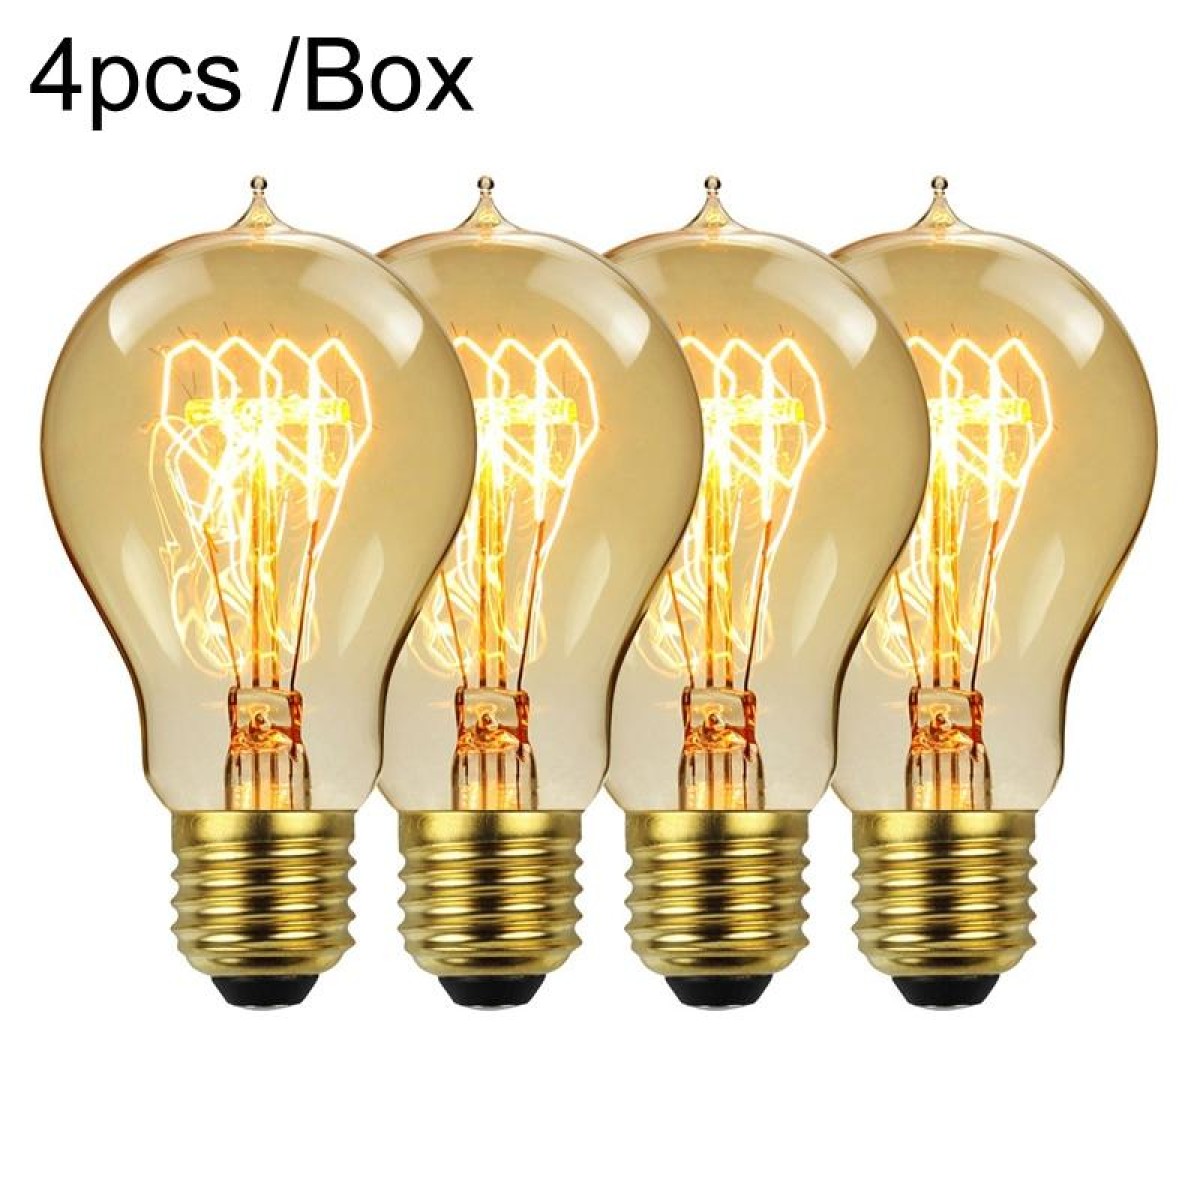 4pcs /Box A60 LED Antique Lamp Vintage Decorative Illumination Light Bulb, Power: 110V 40W(Tip Gold)